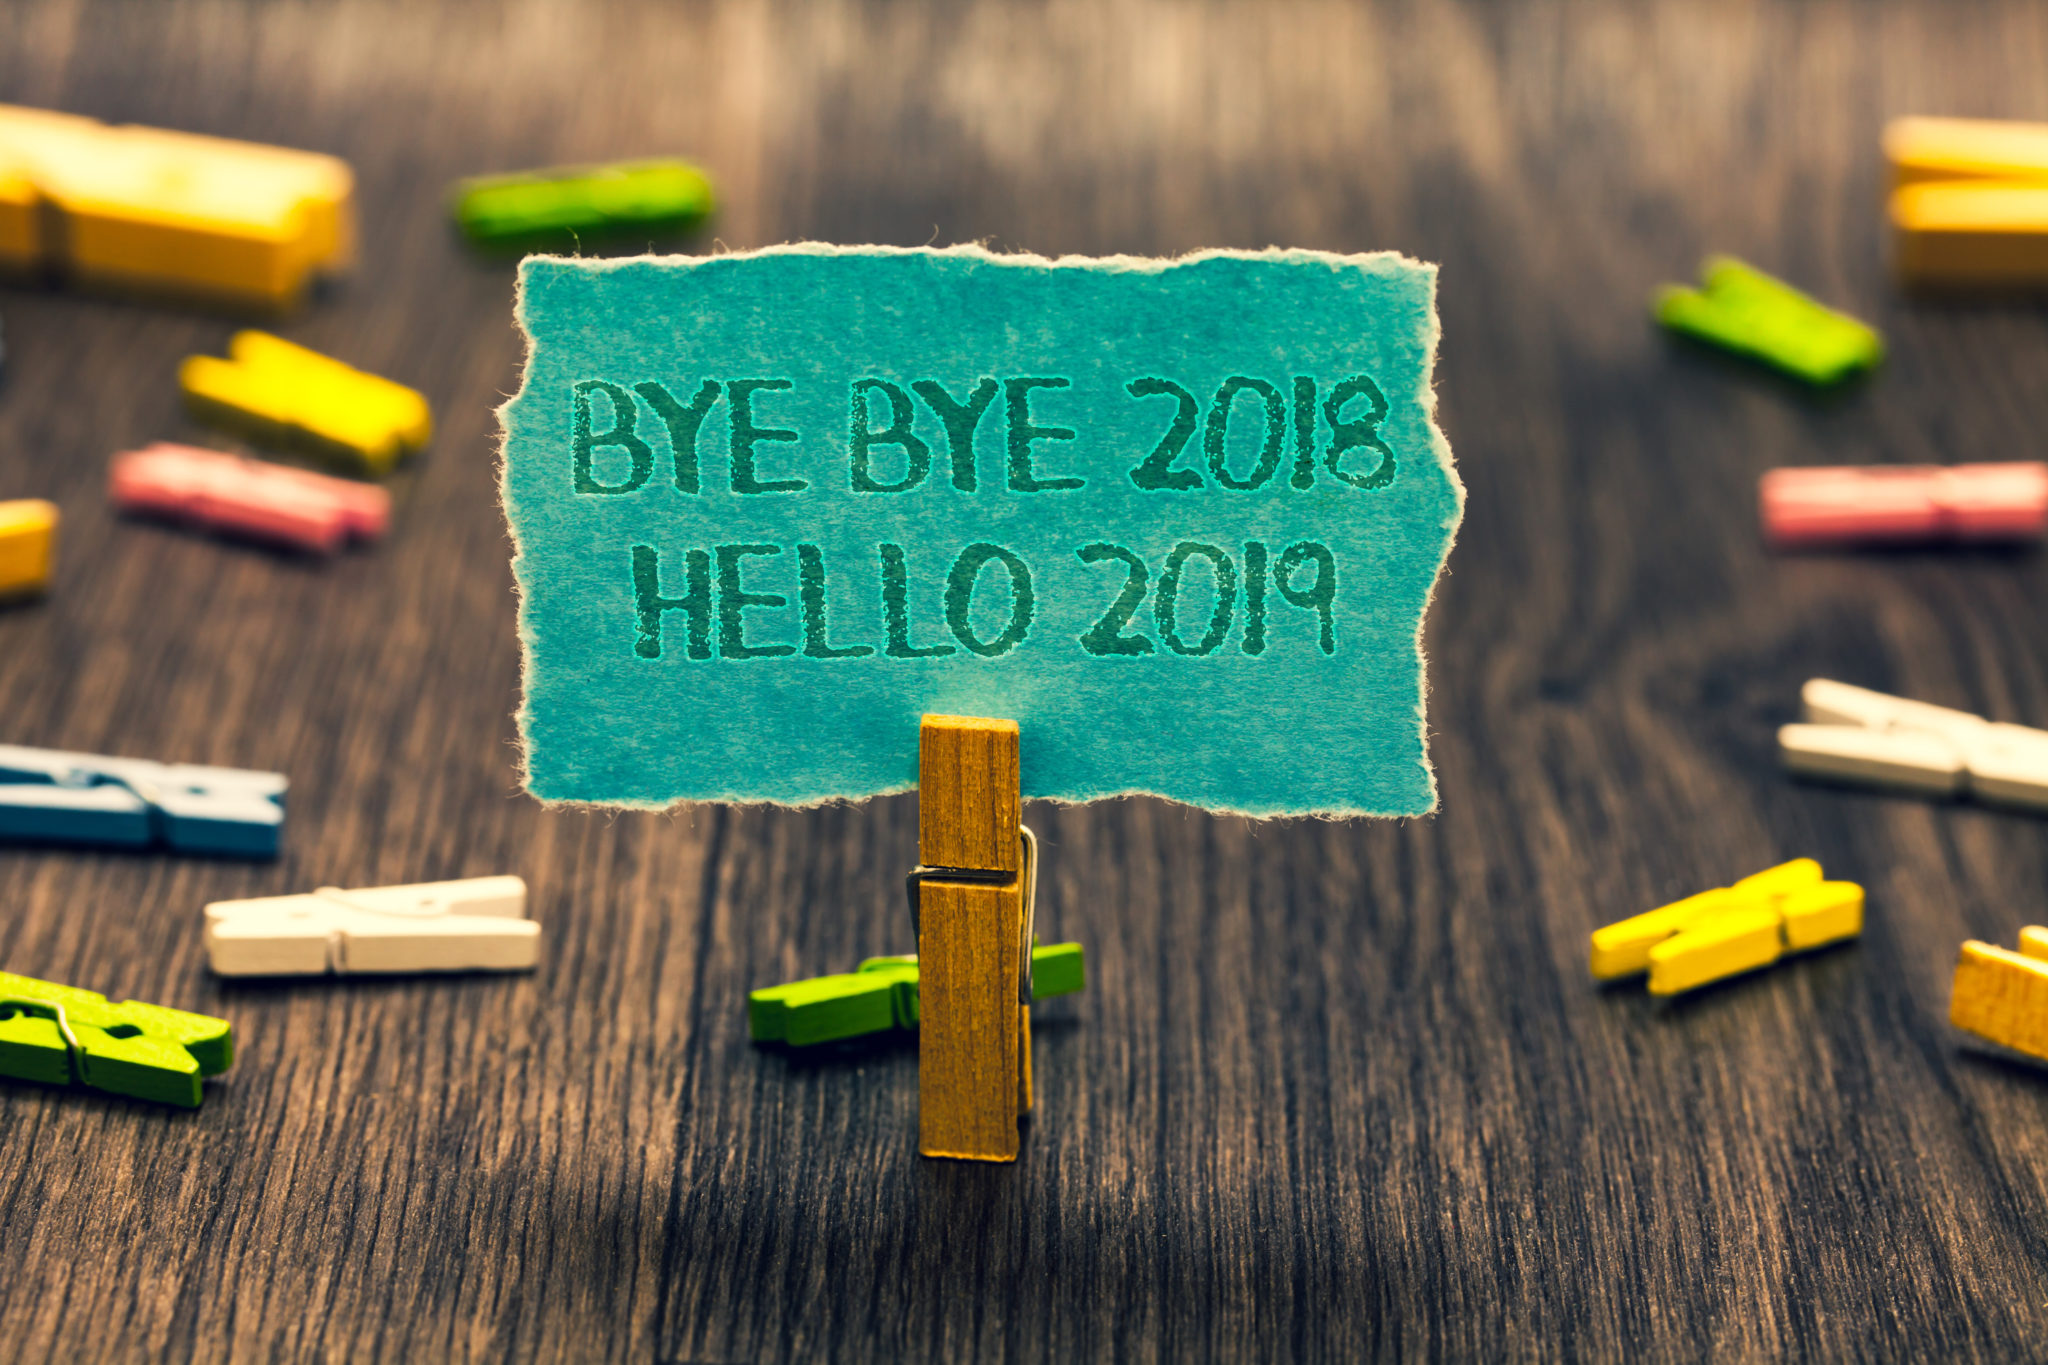 Bye Bye 2018